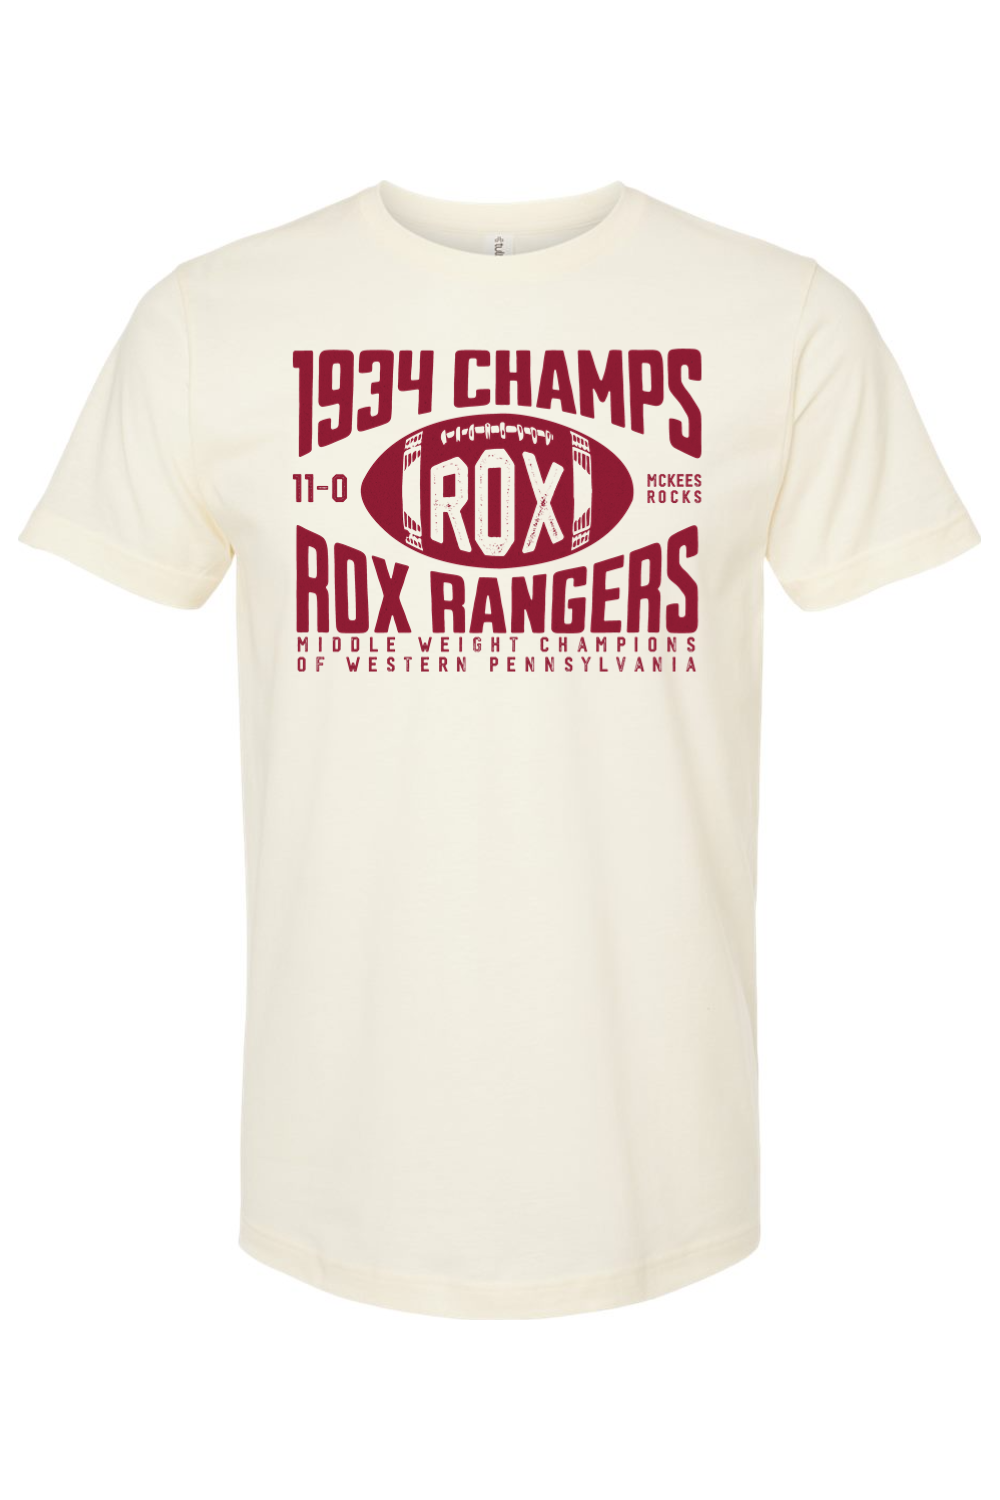 Rox Rangers Football - 1934 Champs - McKees Rocks